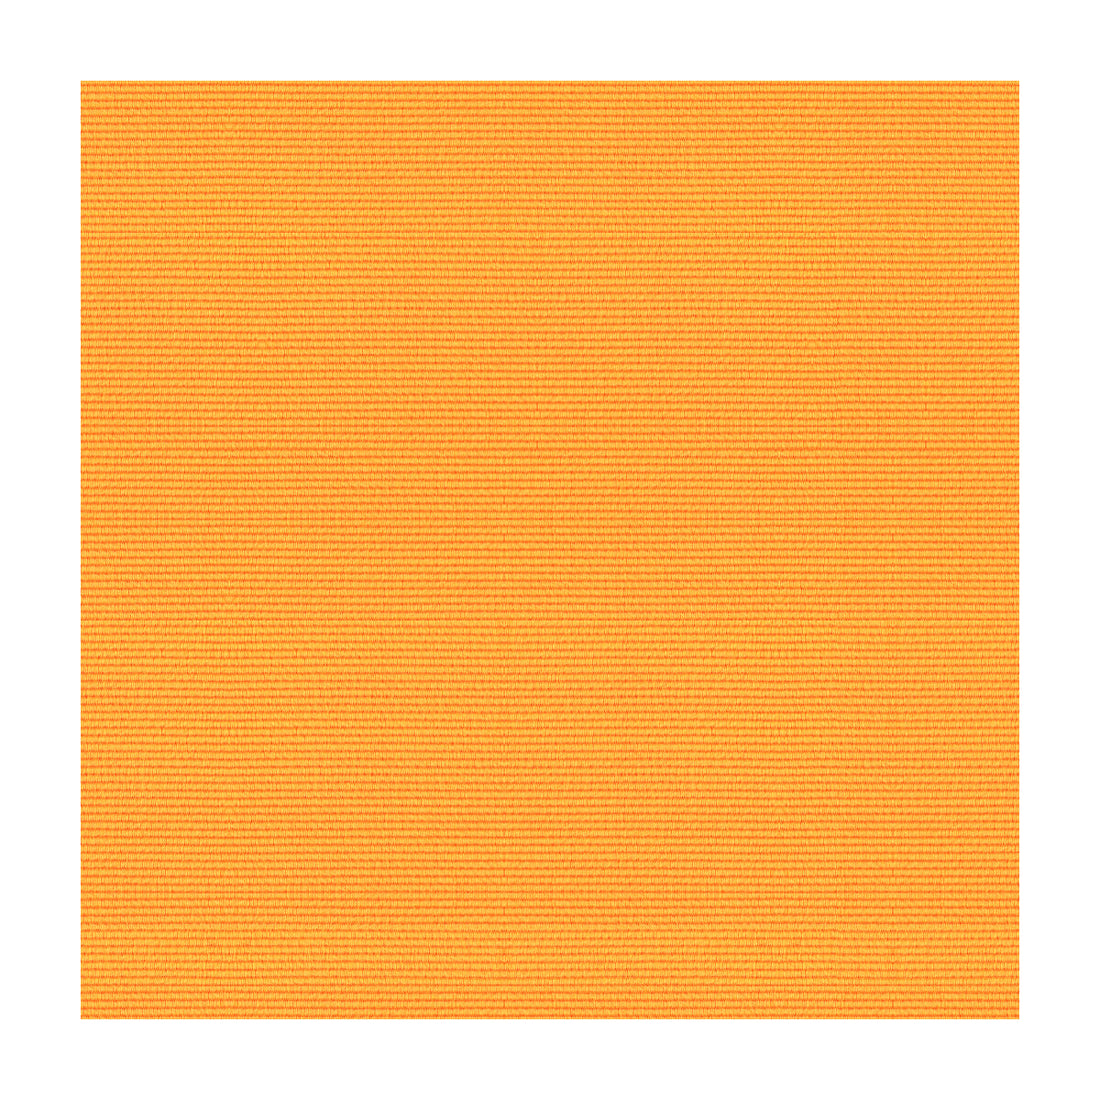 Bosporus Ottoman Texture fabric in pollen color - pattern BR-83806.342.0 - by Brunschwig &amp; Fils